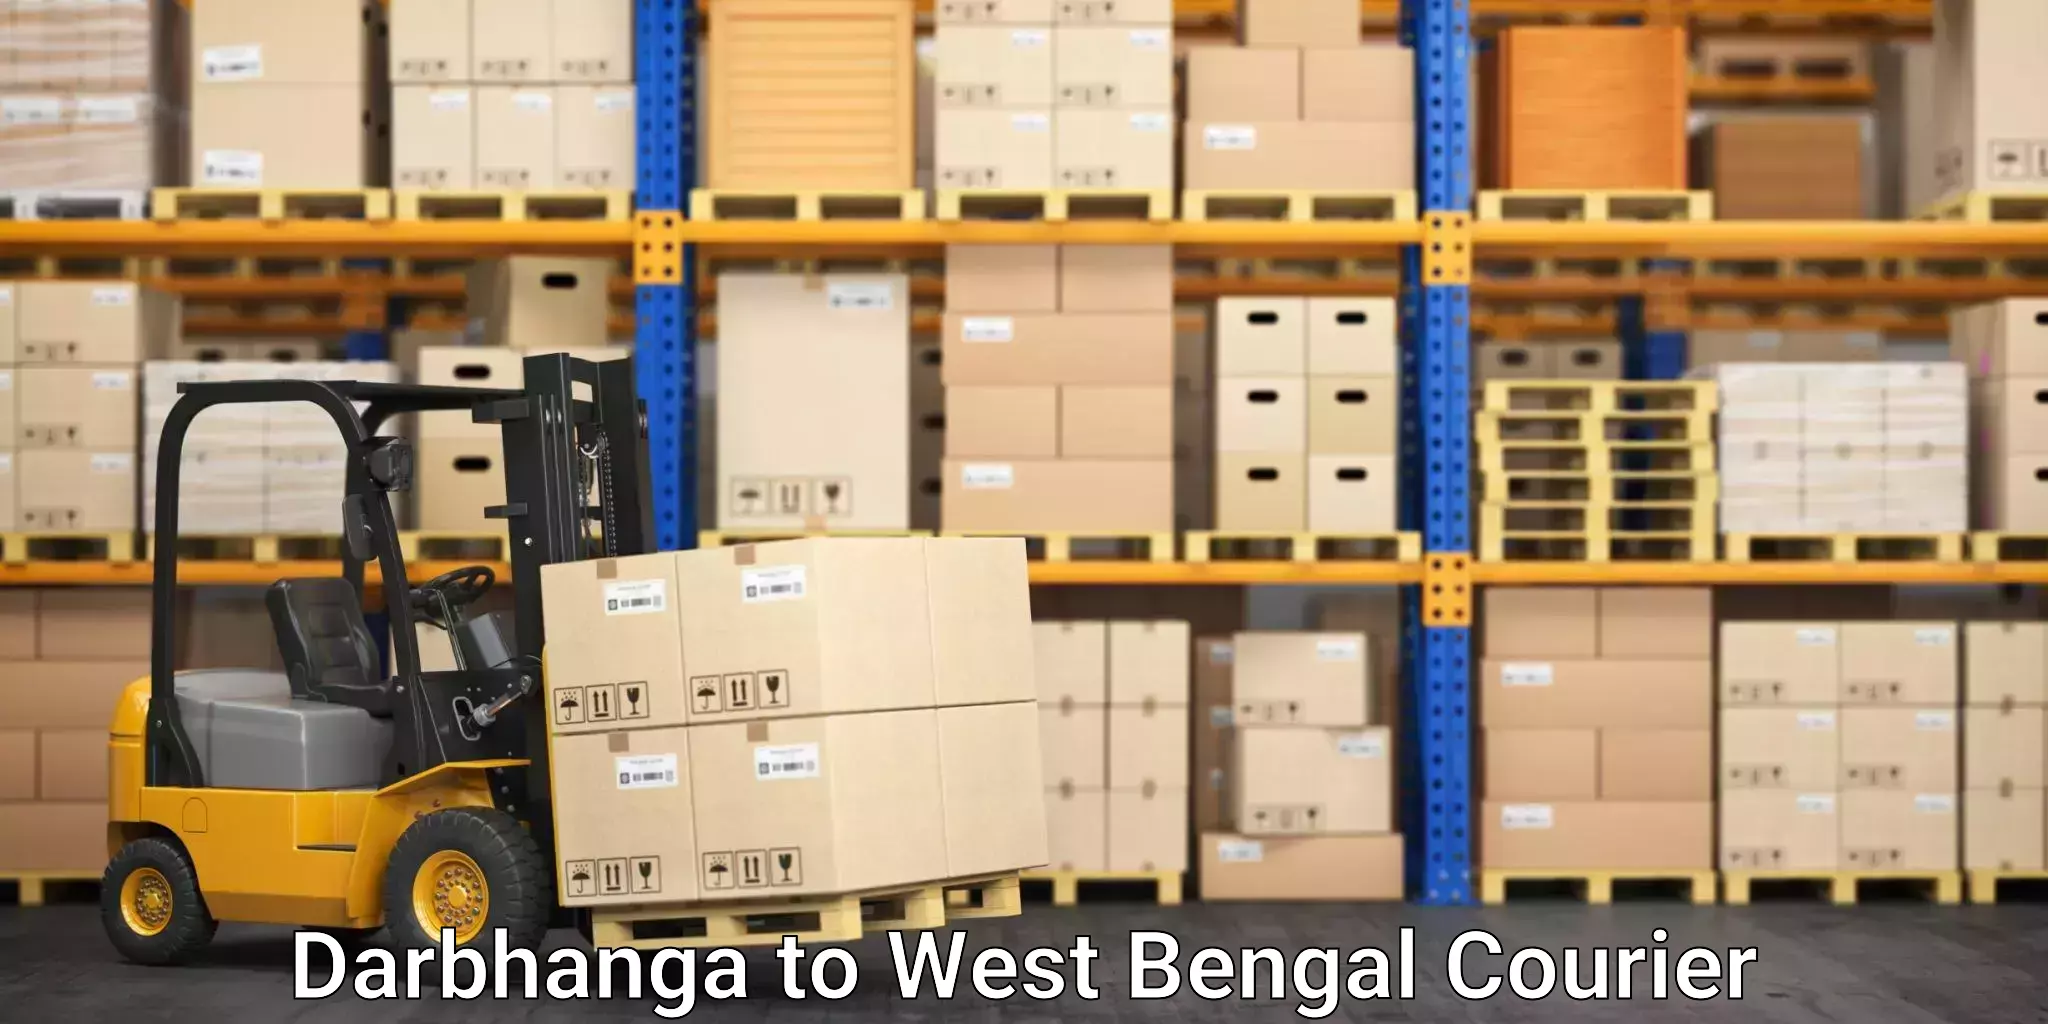 Furniture relocation experts Darbhanga to Chalsa